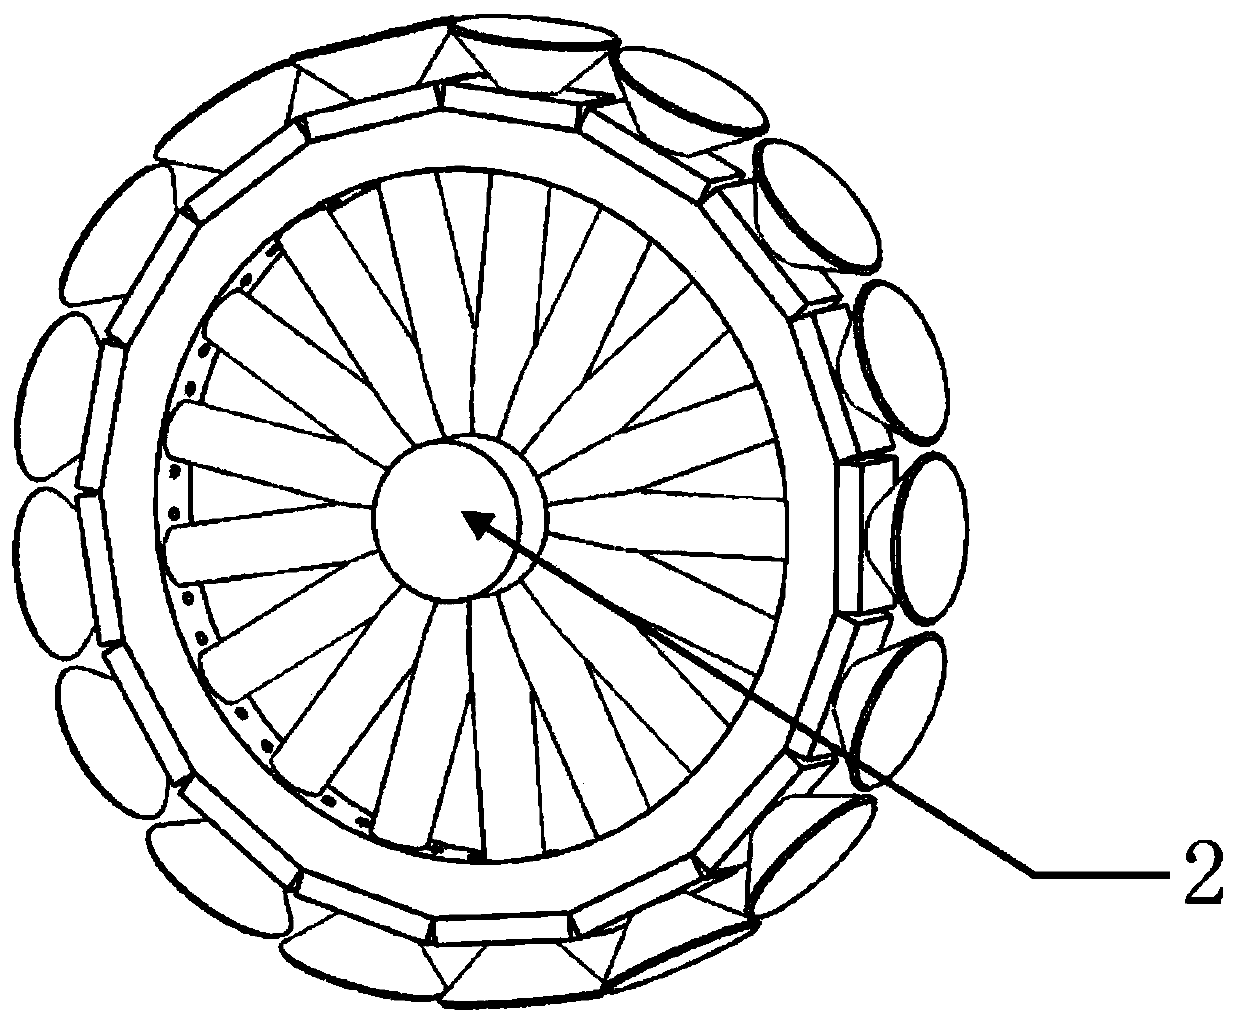 Adsorption-type climbing wheel and work method thereof